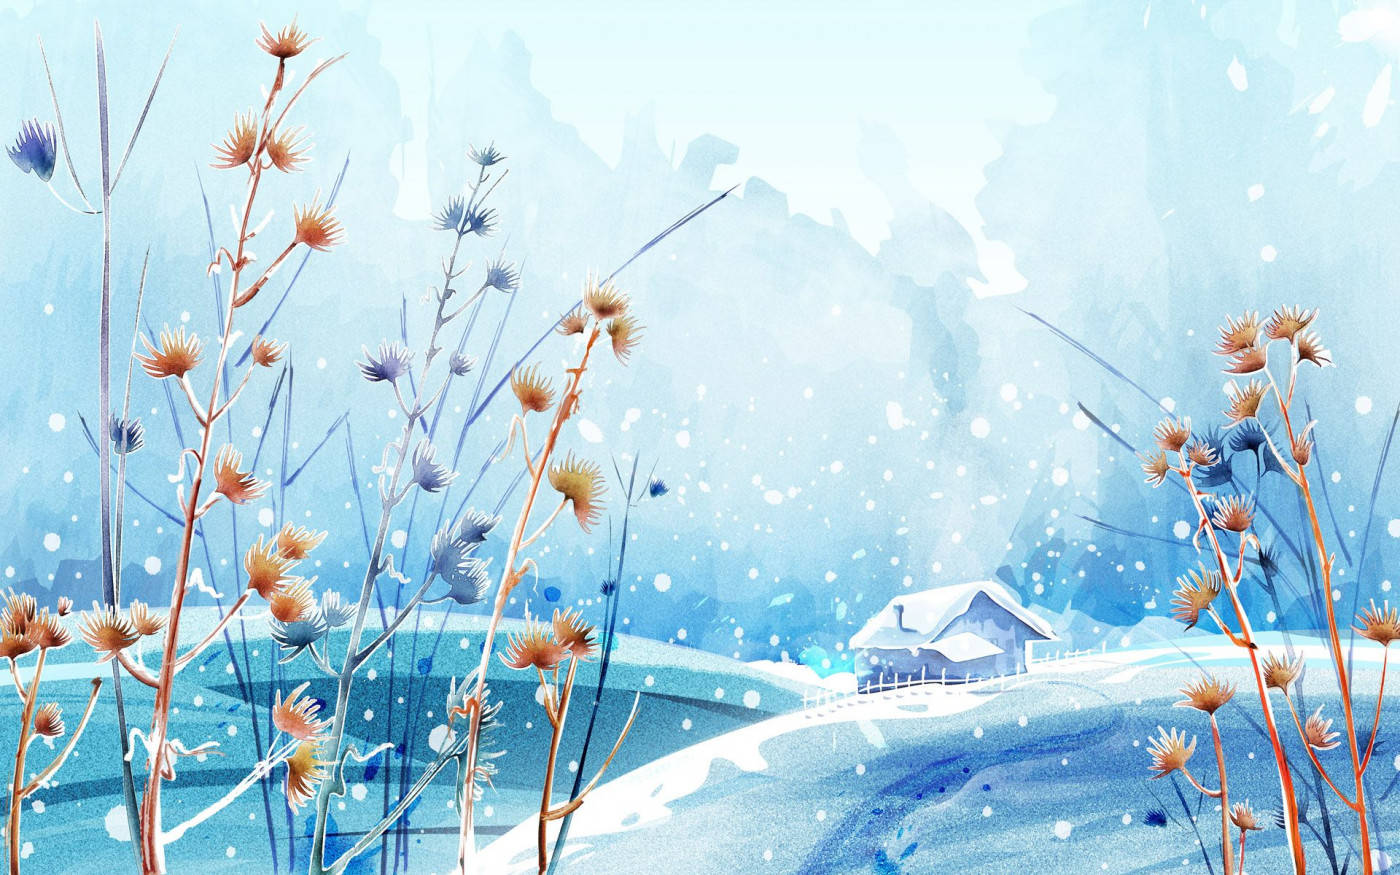 Winter Scene Digital Art Wallpaper